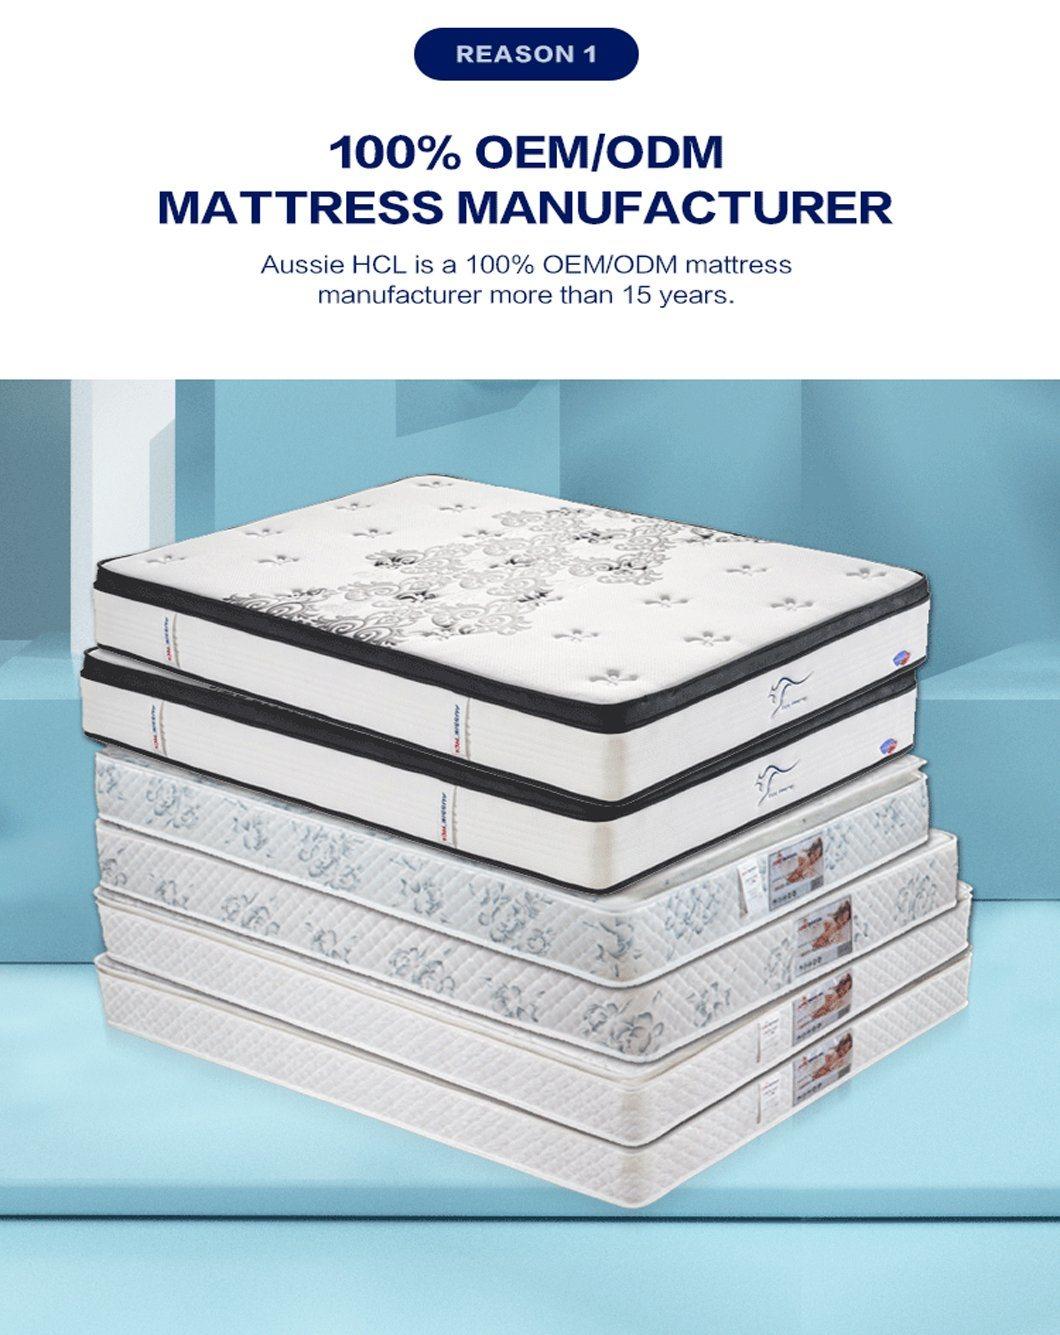 The Best Factory Aussie Roll Sleeping Well King Double Full Size Gel Memory Foam Spring Mattress in a Box